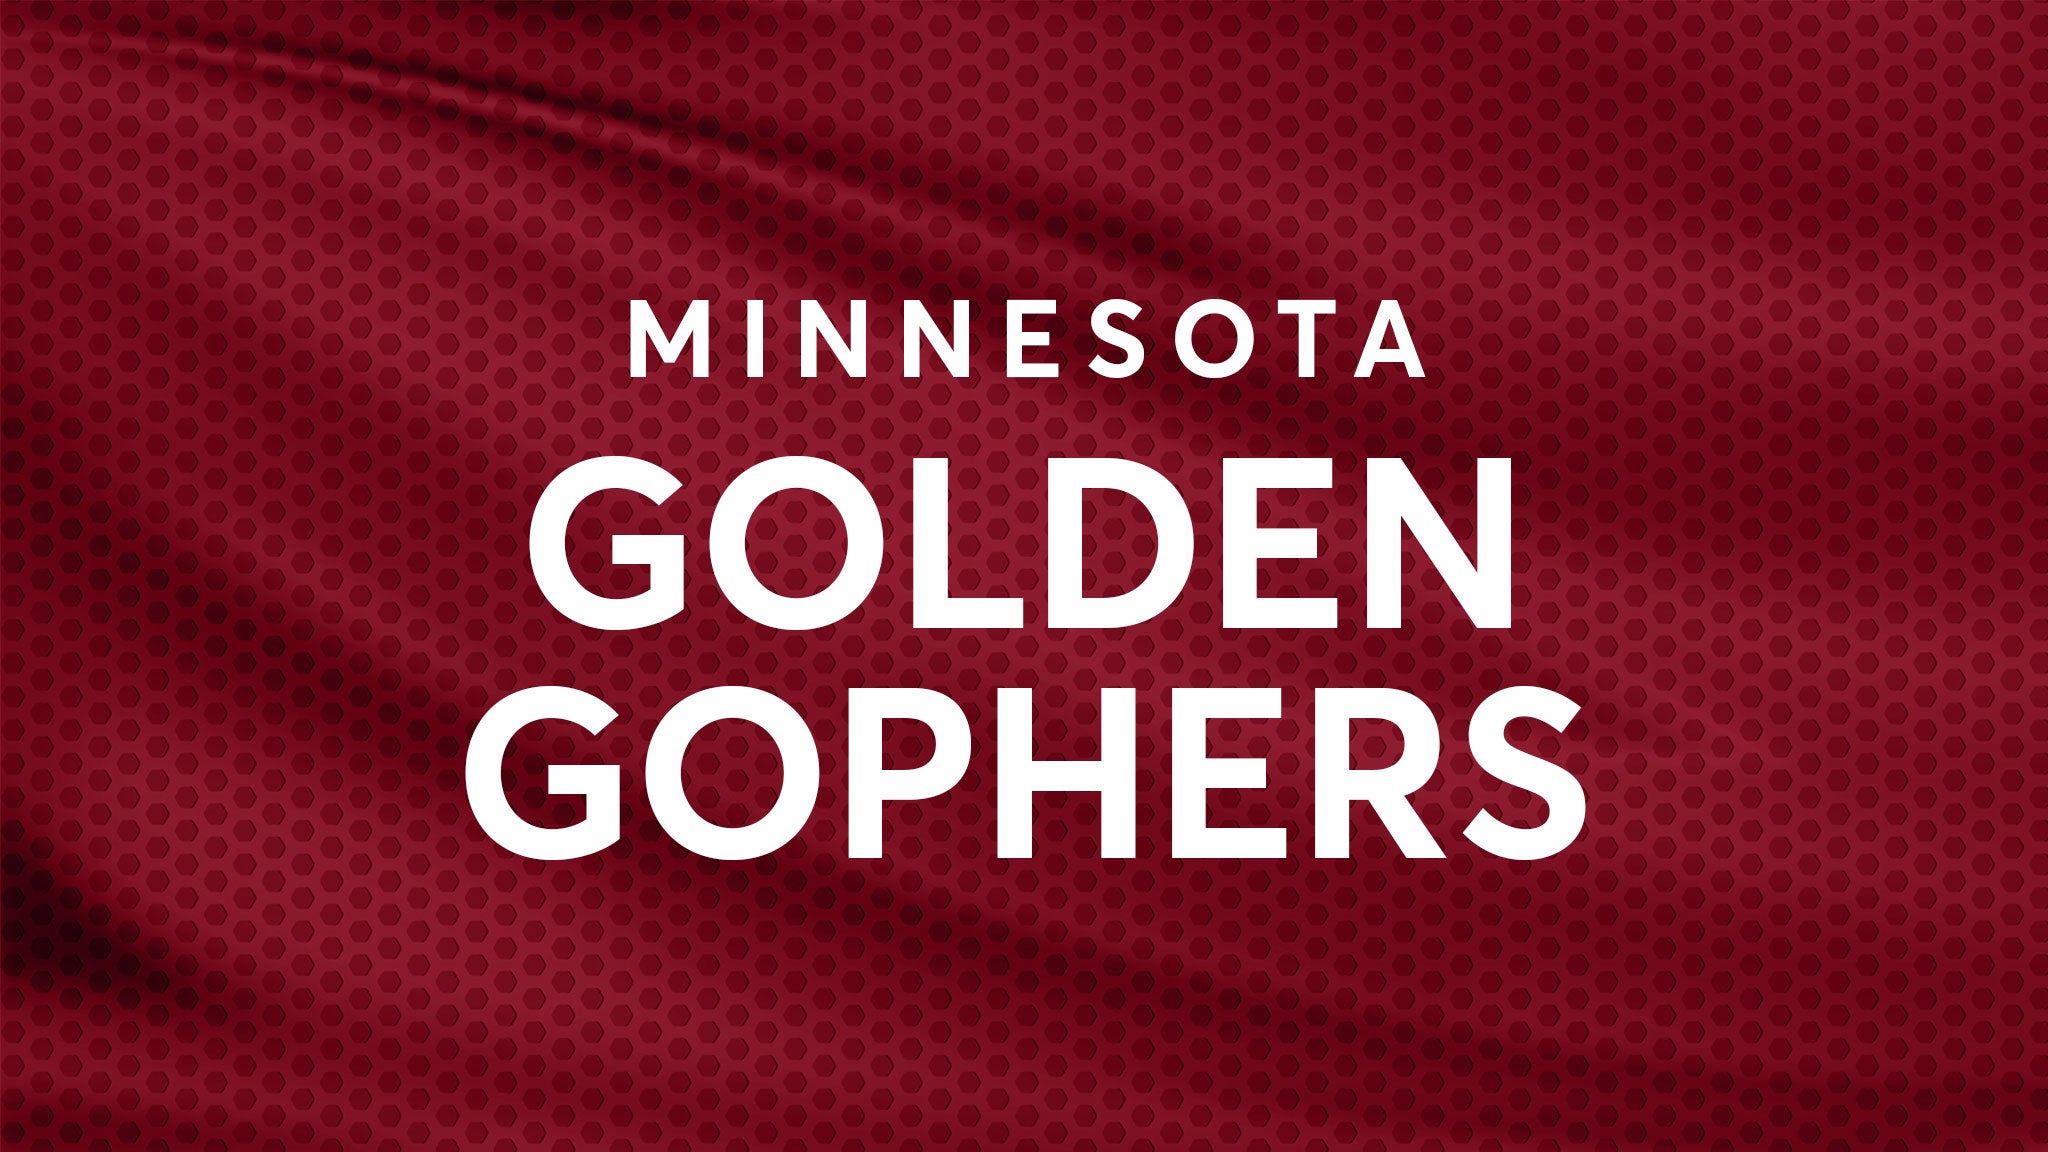 Minnesota Gophers Football vs. USC Trojans Football hero